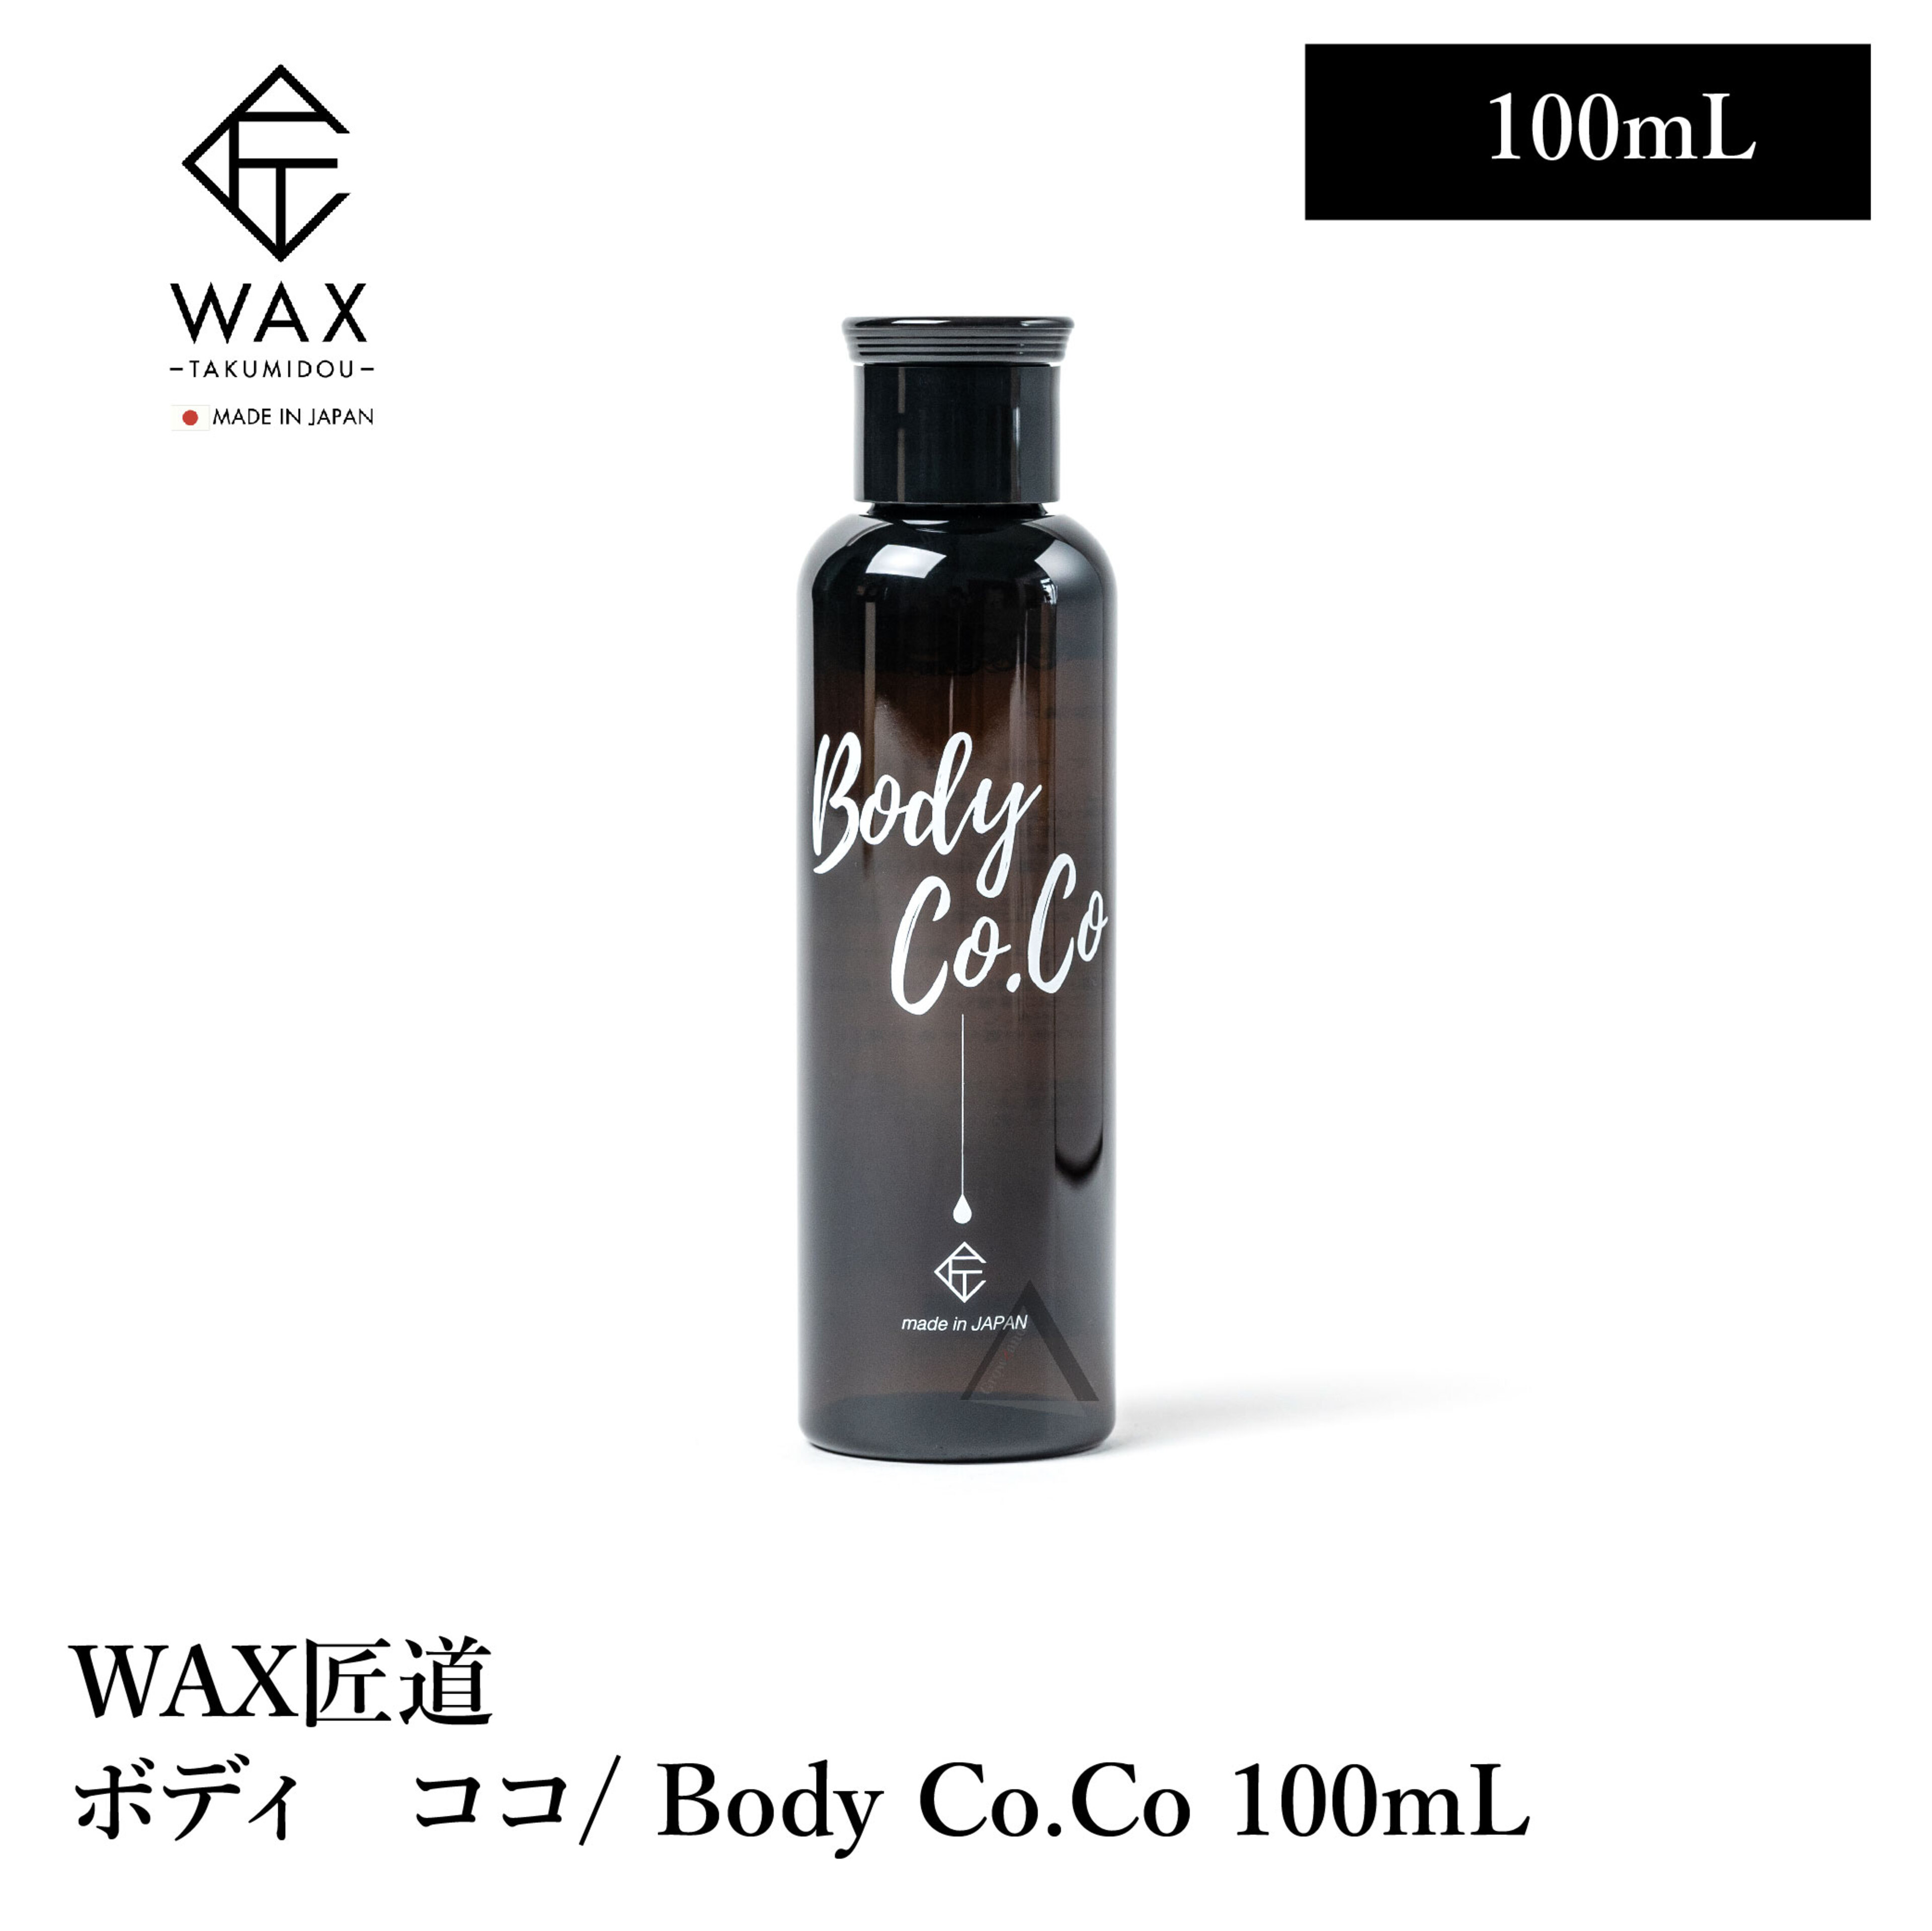 WAX匠道 / WAXTAKUMIDOU / Body Co.Co / ボディー ココ 100mL / 脱毛 アフターセラム 肌ストレス 滑らか 色素沈着 予防 美容液